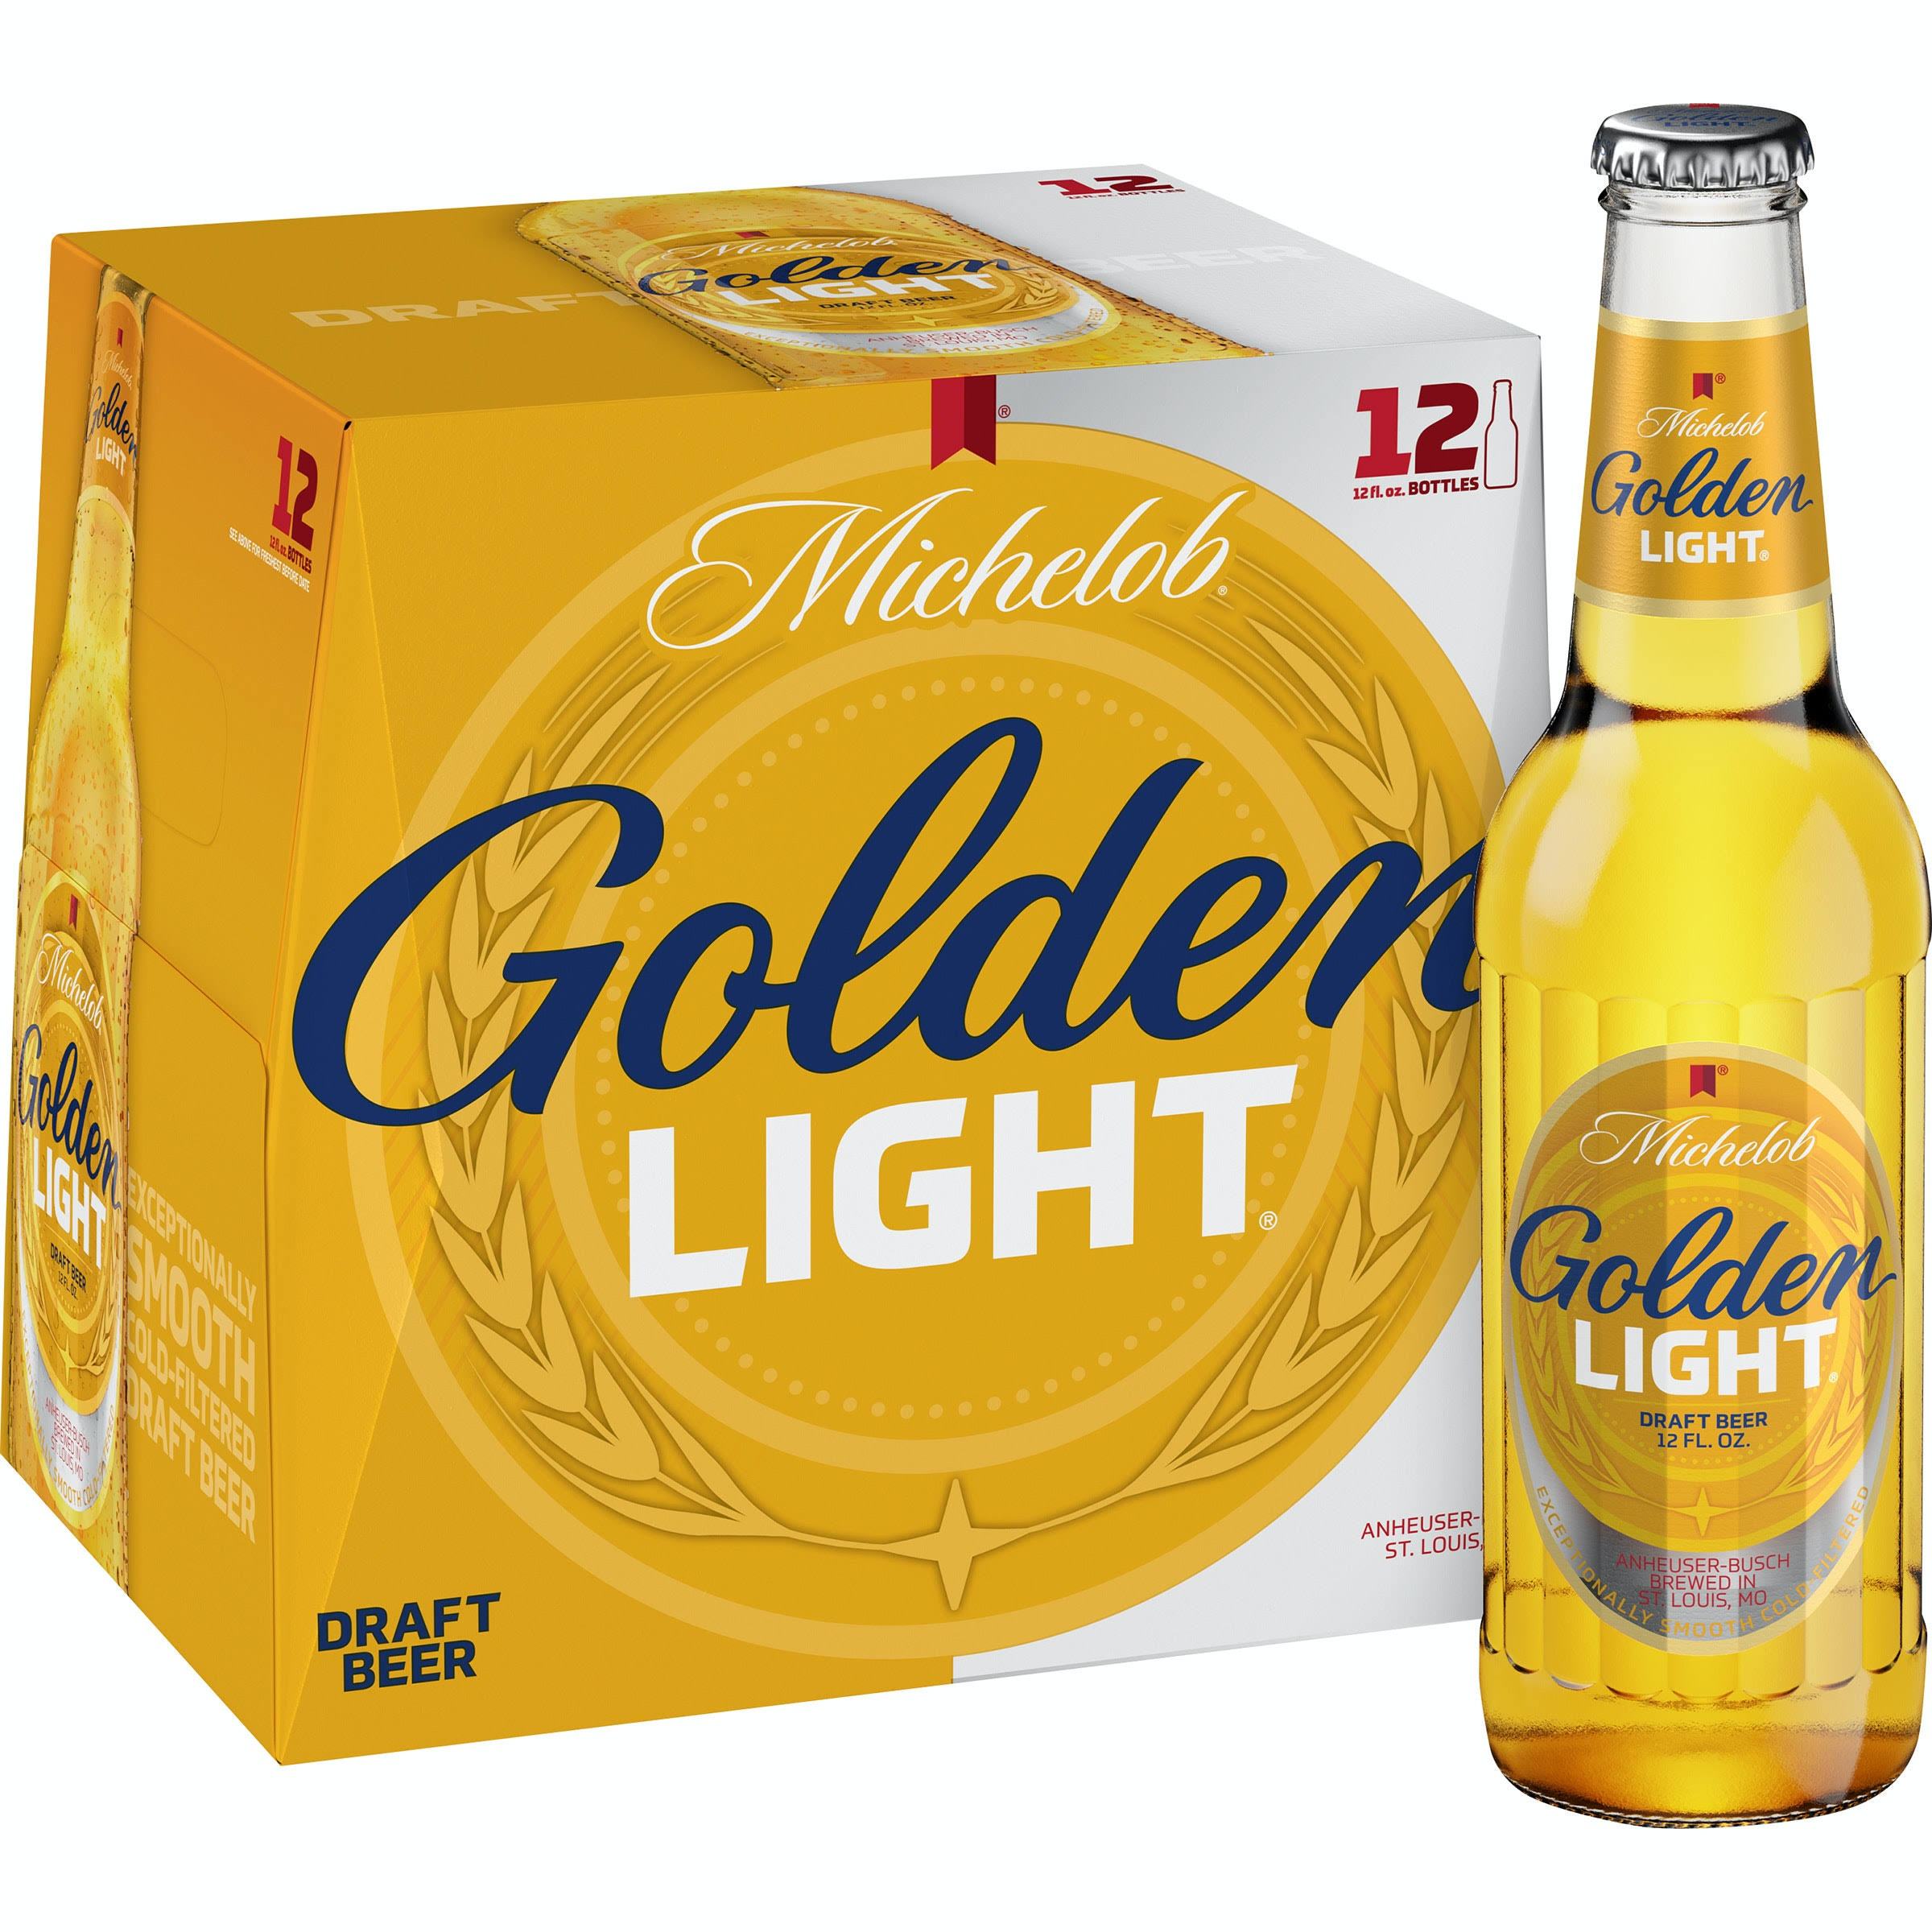 Michelob Glass Bottles Golden Light Draft Beer - 12oz, 12pk